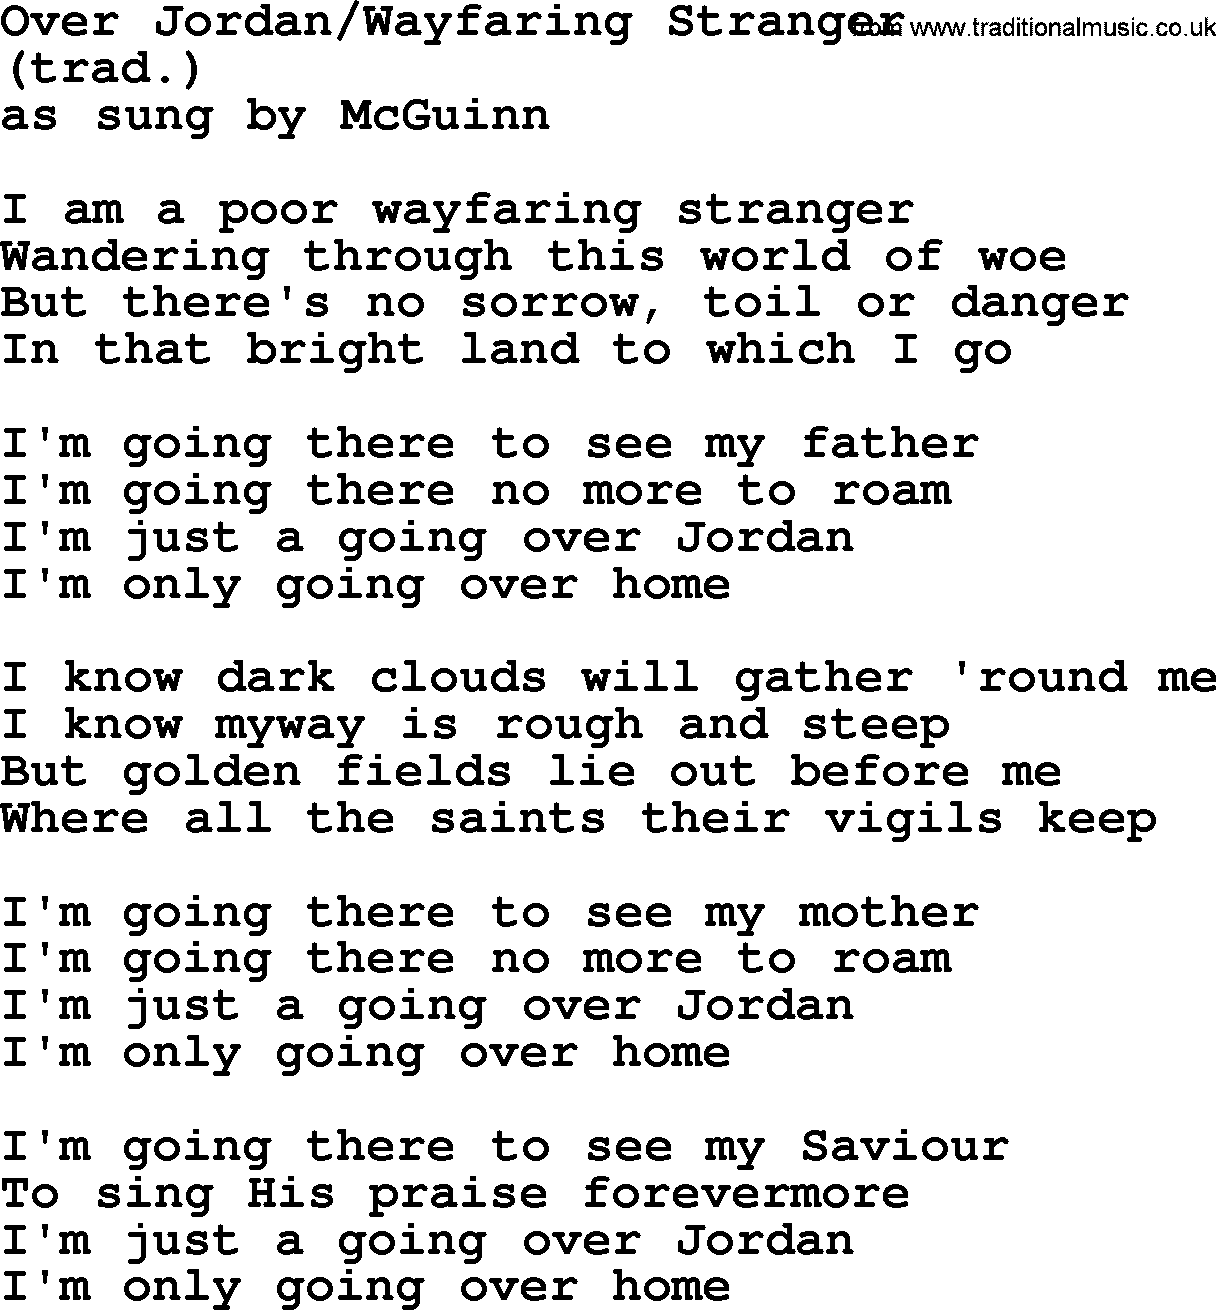 The Byrds song Over Jordan Wayfaring Stranger, lyrics